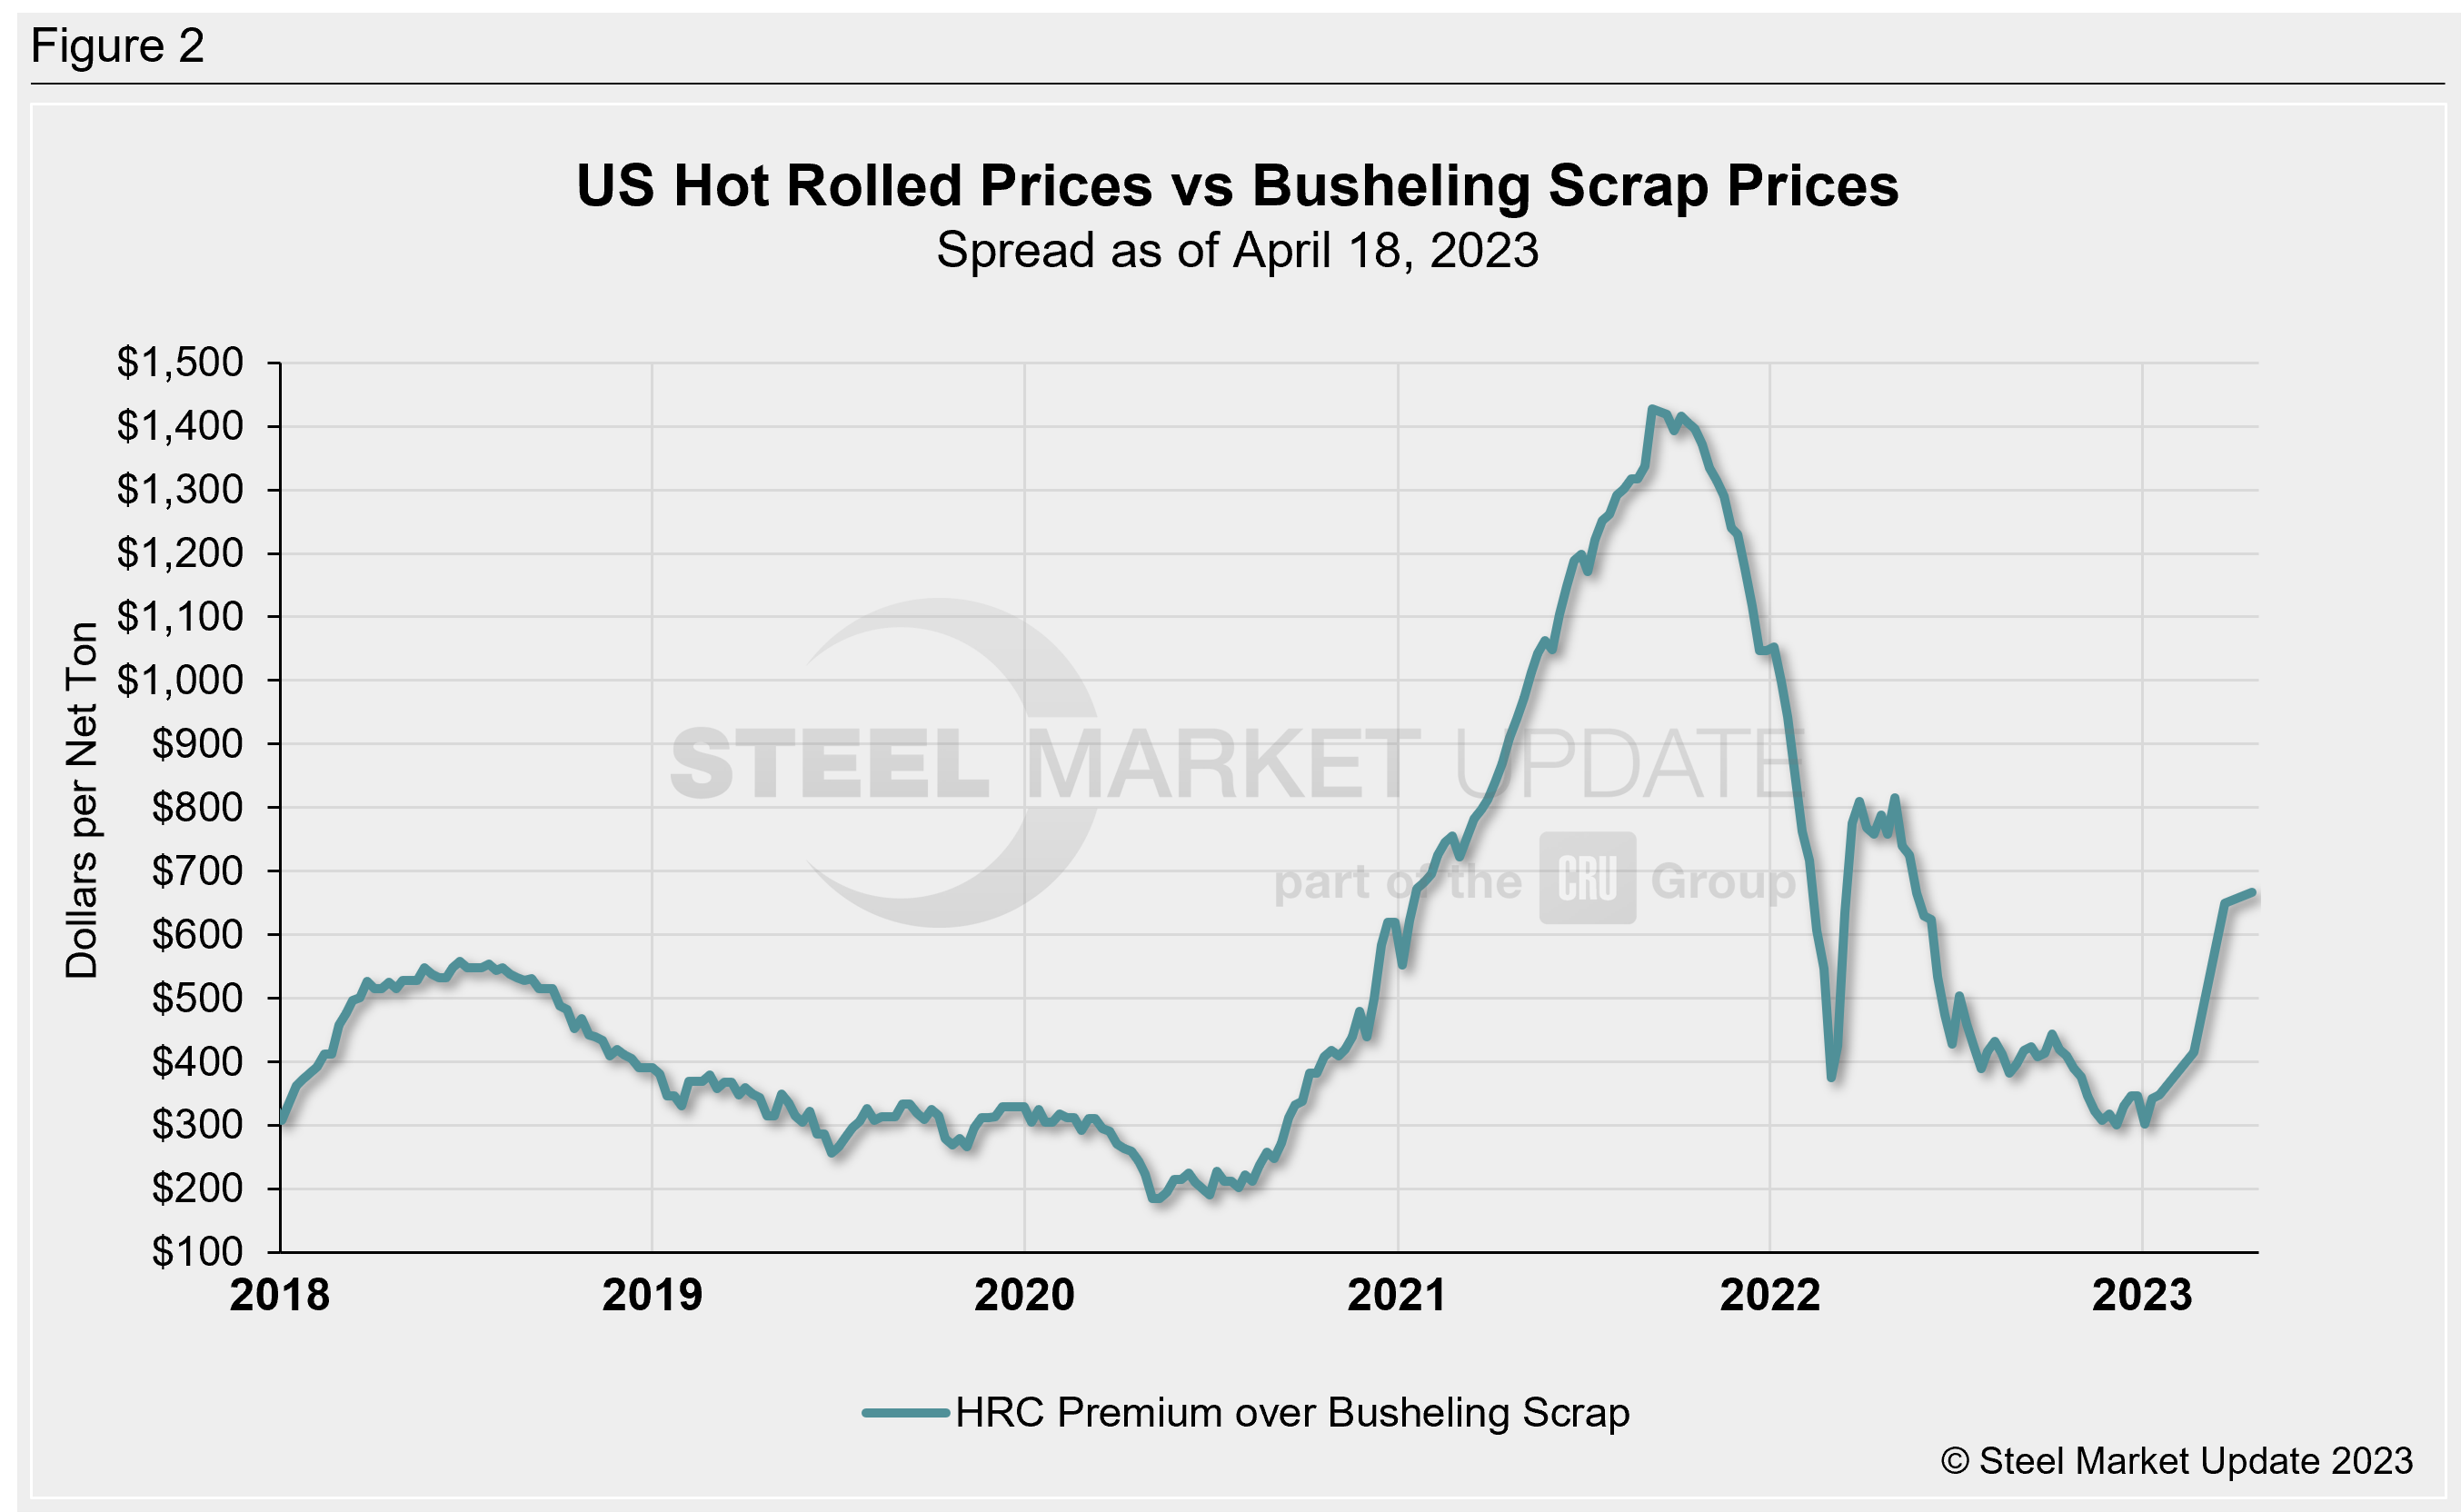 Hot rolled steel price premium over busheling scrap